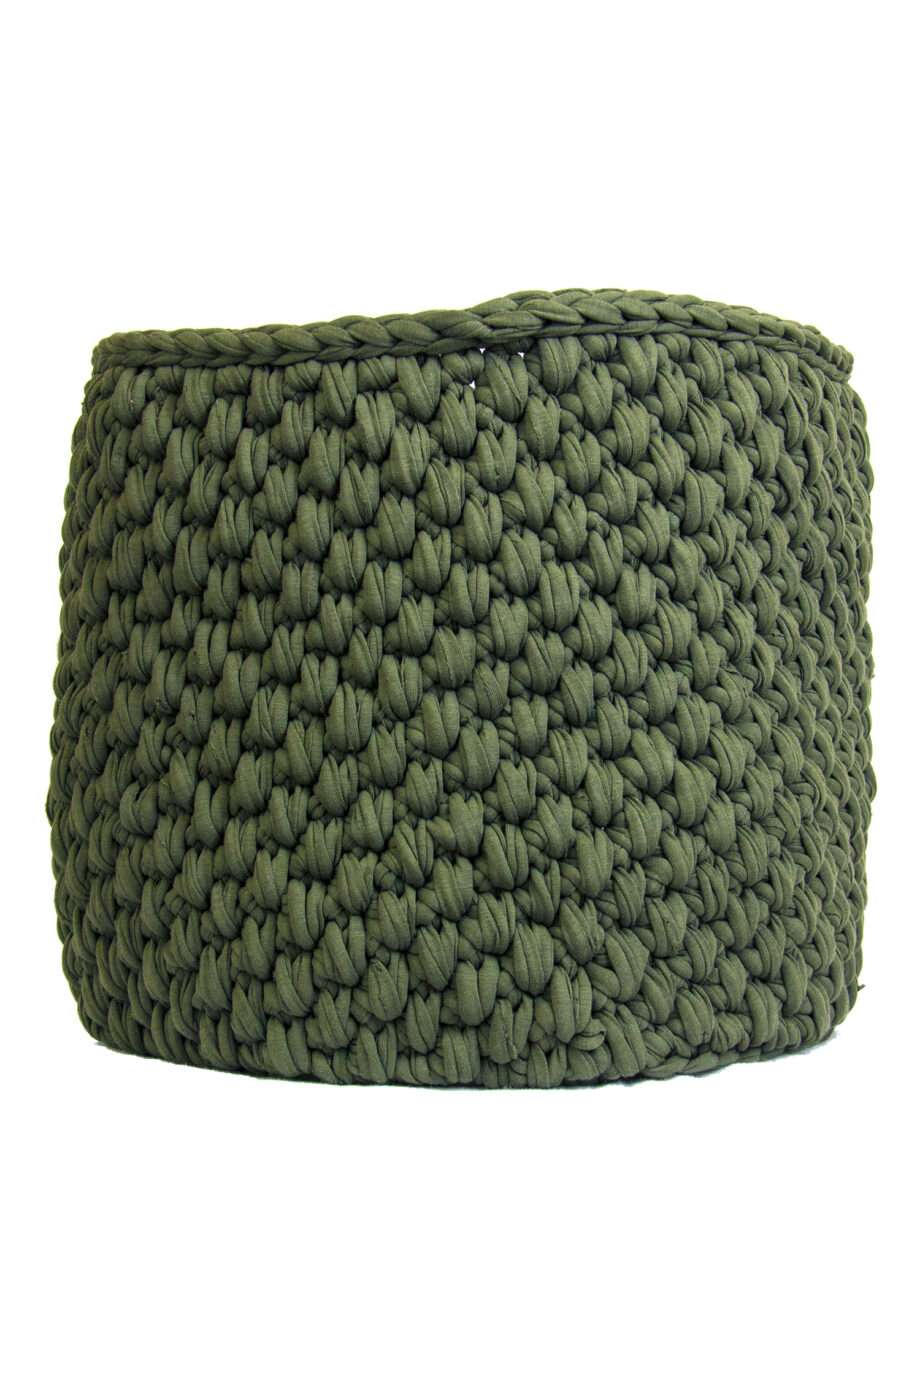 peony hunter green crochet cotton basket xlarge